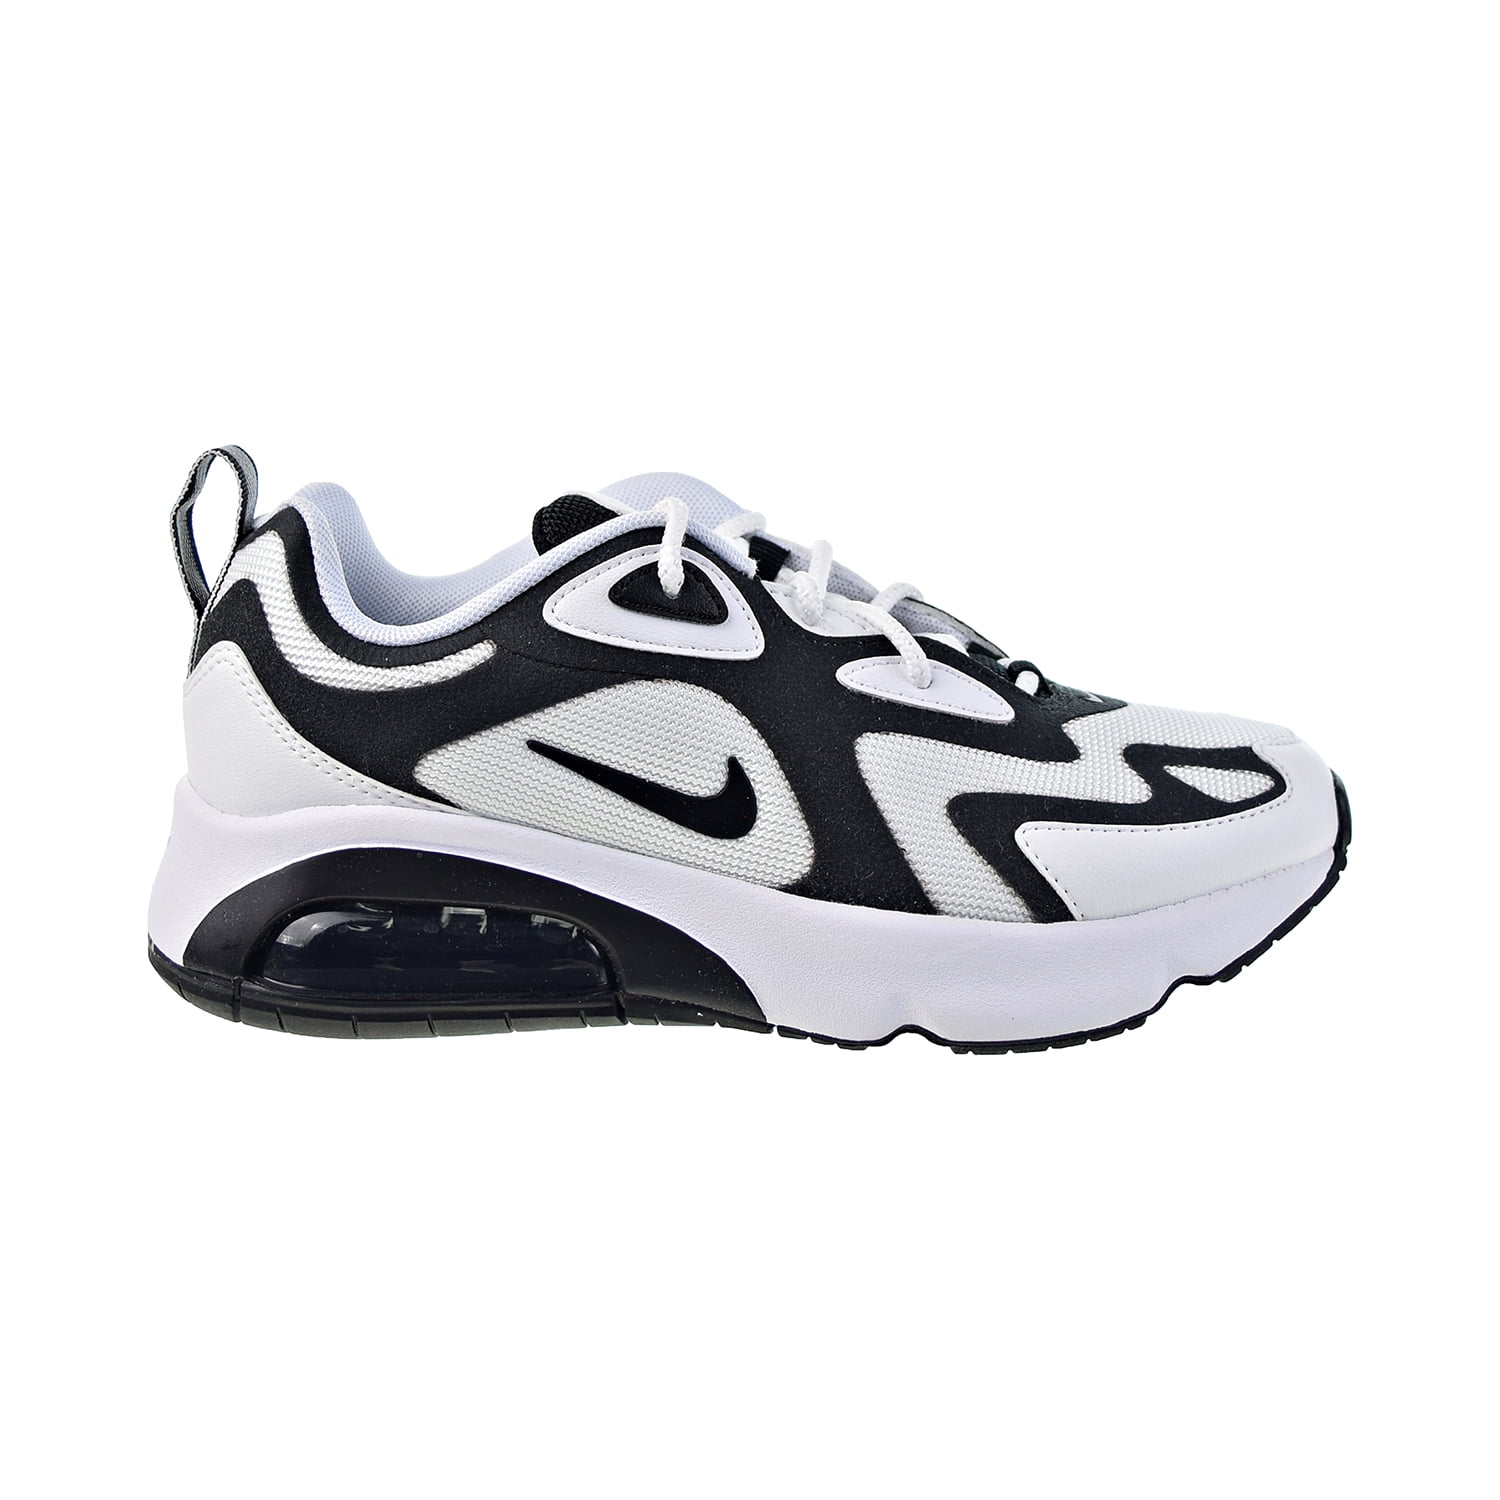 Nike Max 200 Women's Shoes White-Black-Anthracite - Walmart.com